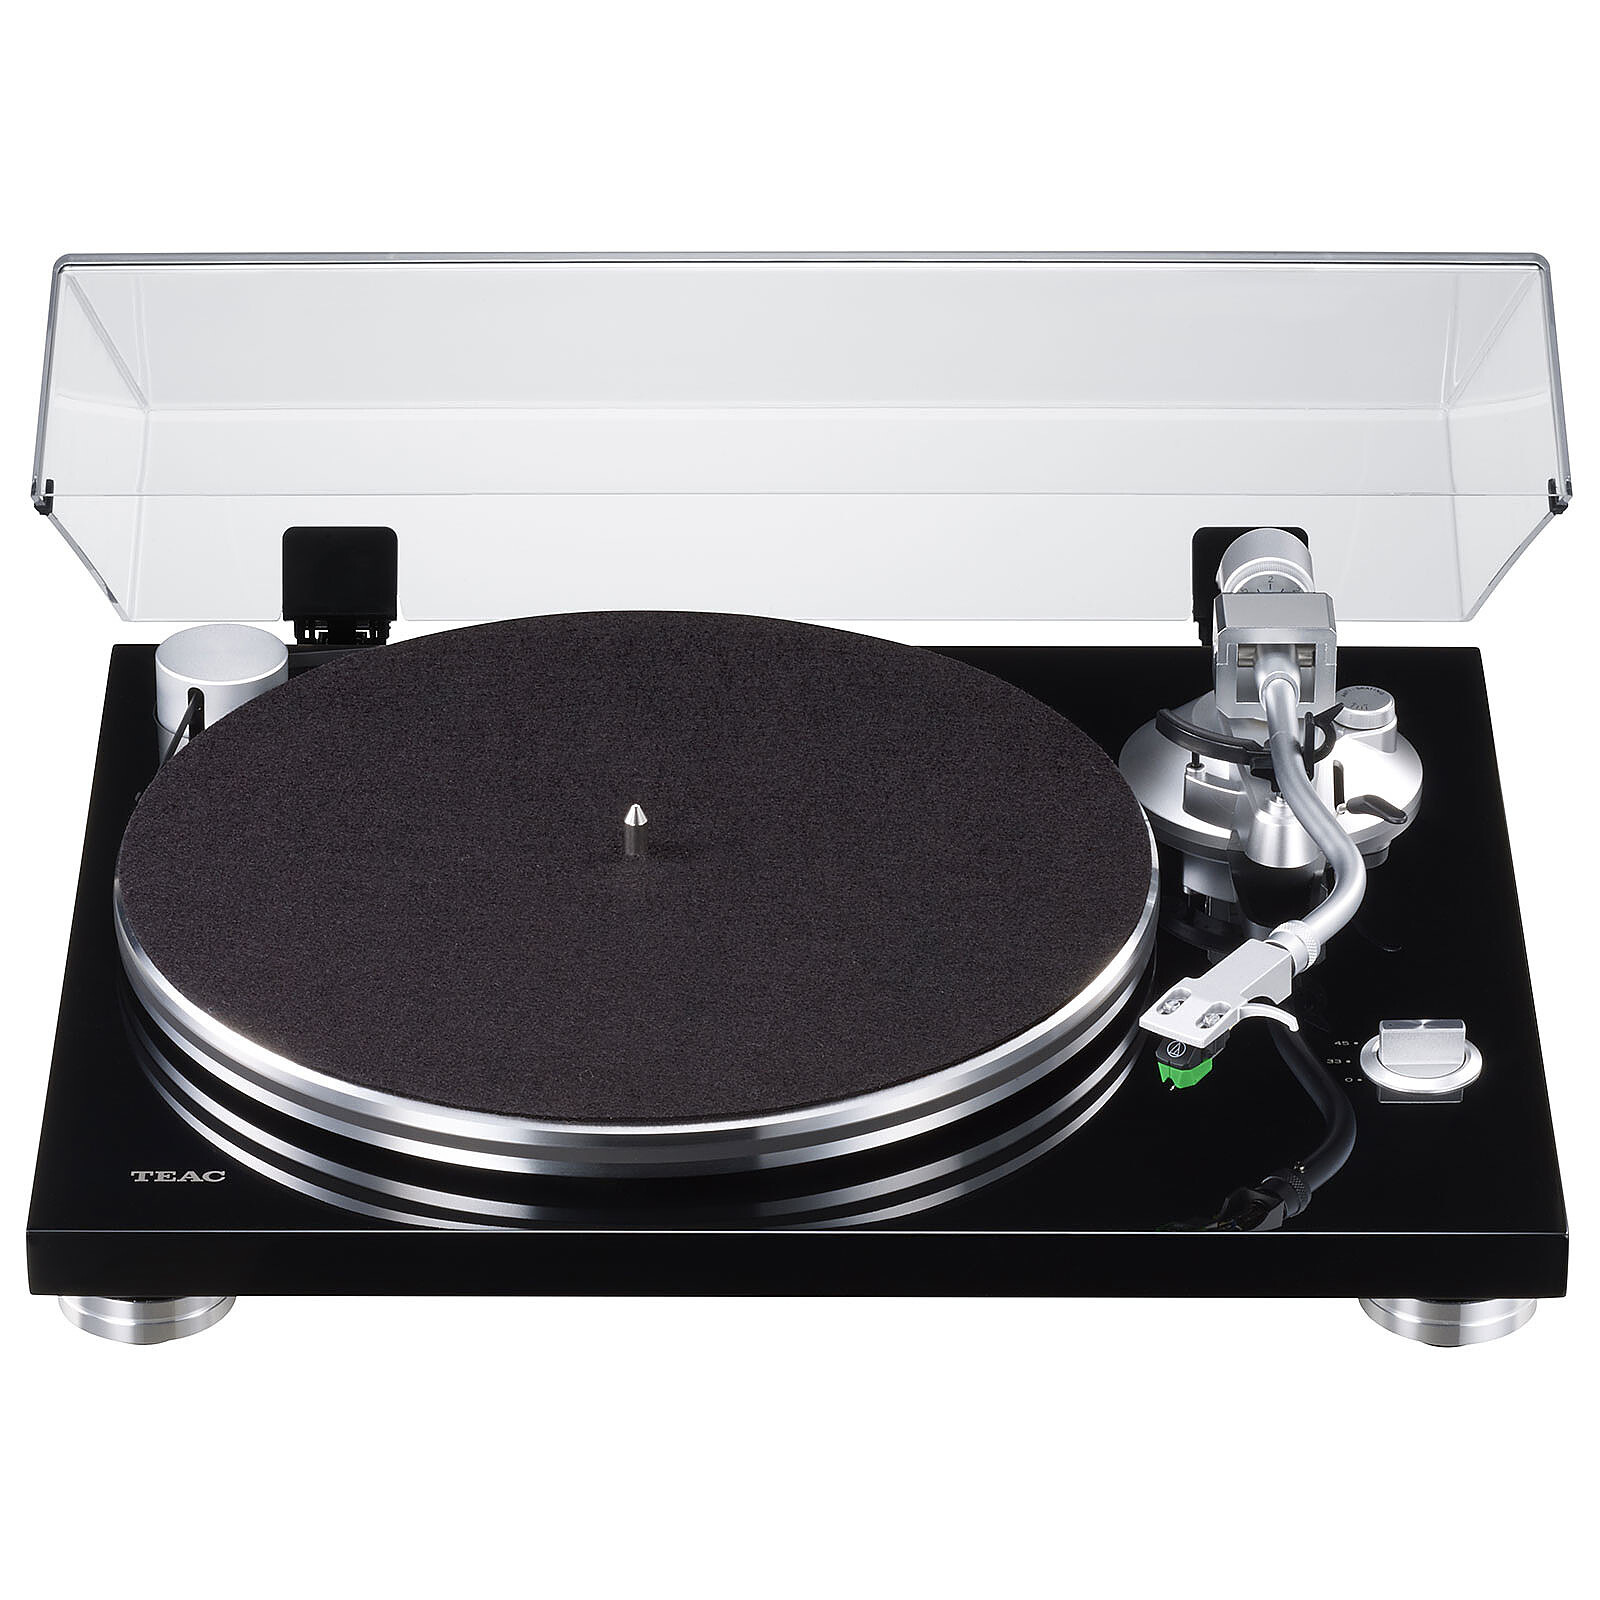 Teac TN-175 Black - Record player - LDLC 3-year warranty